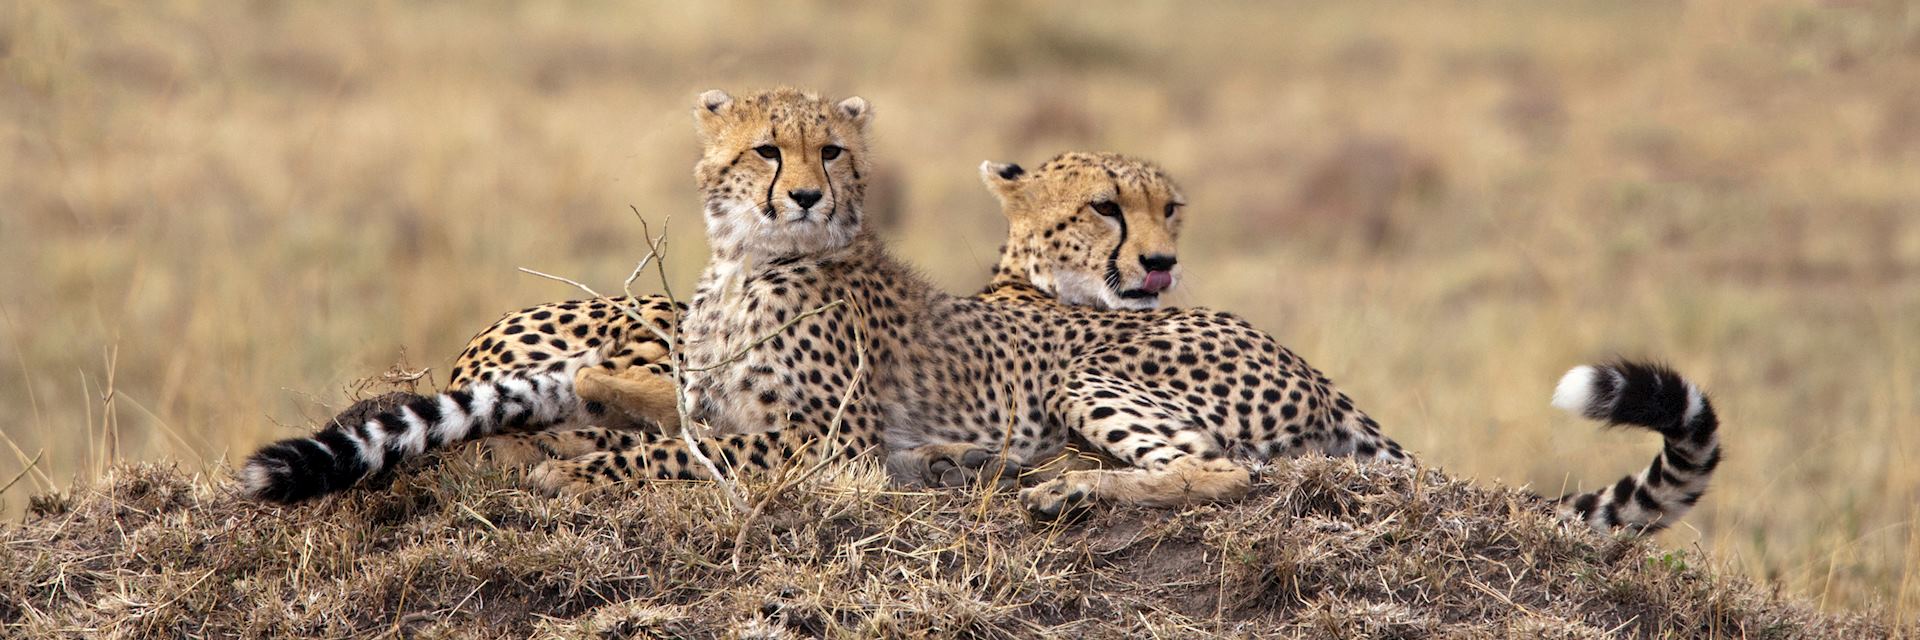 Cheetah in the Masai Mara National Reserve